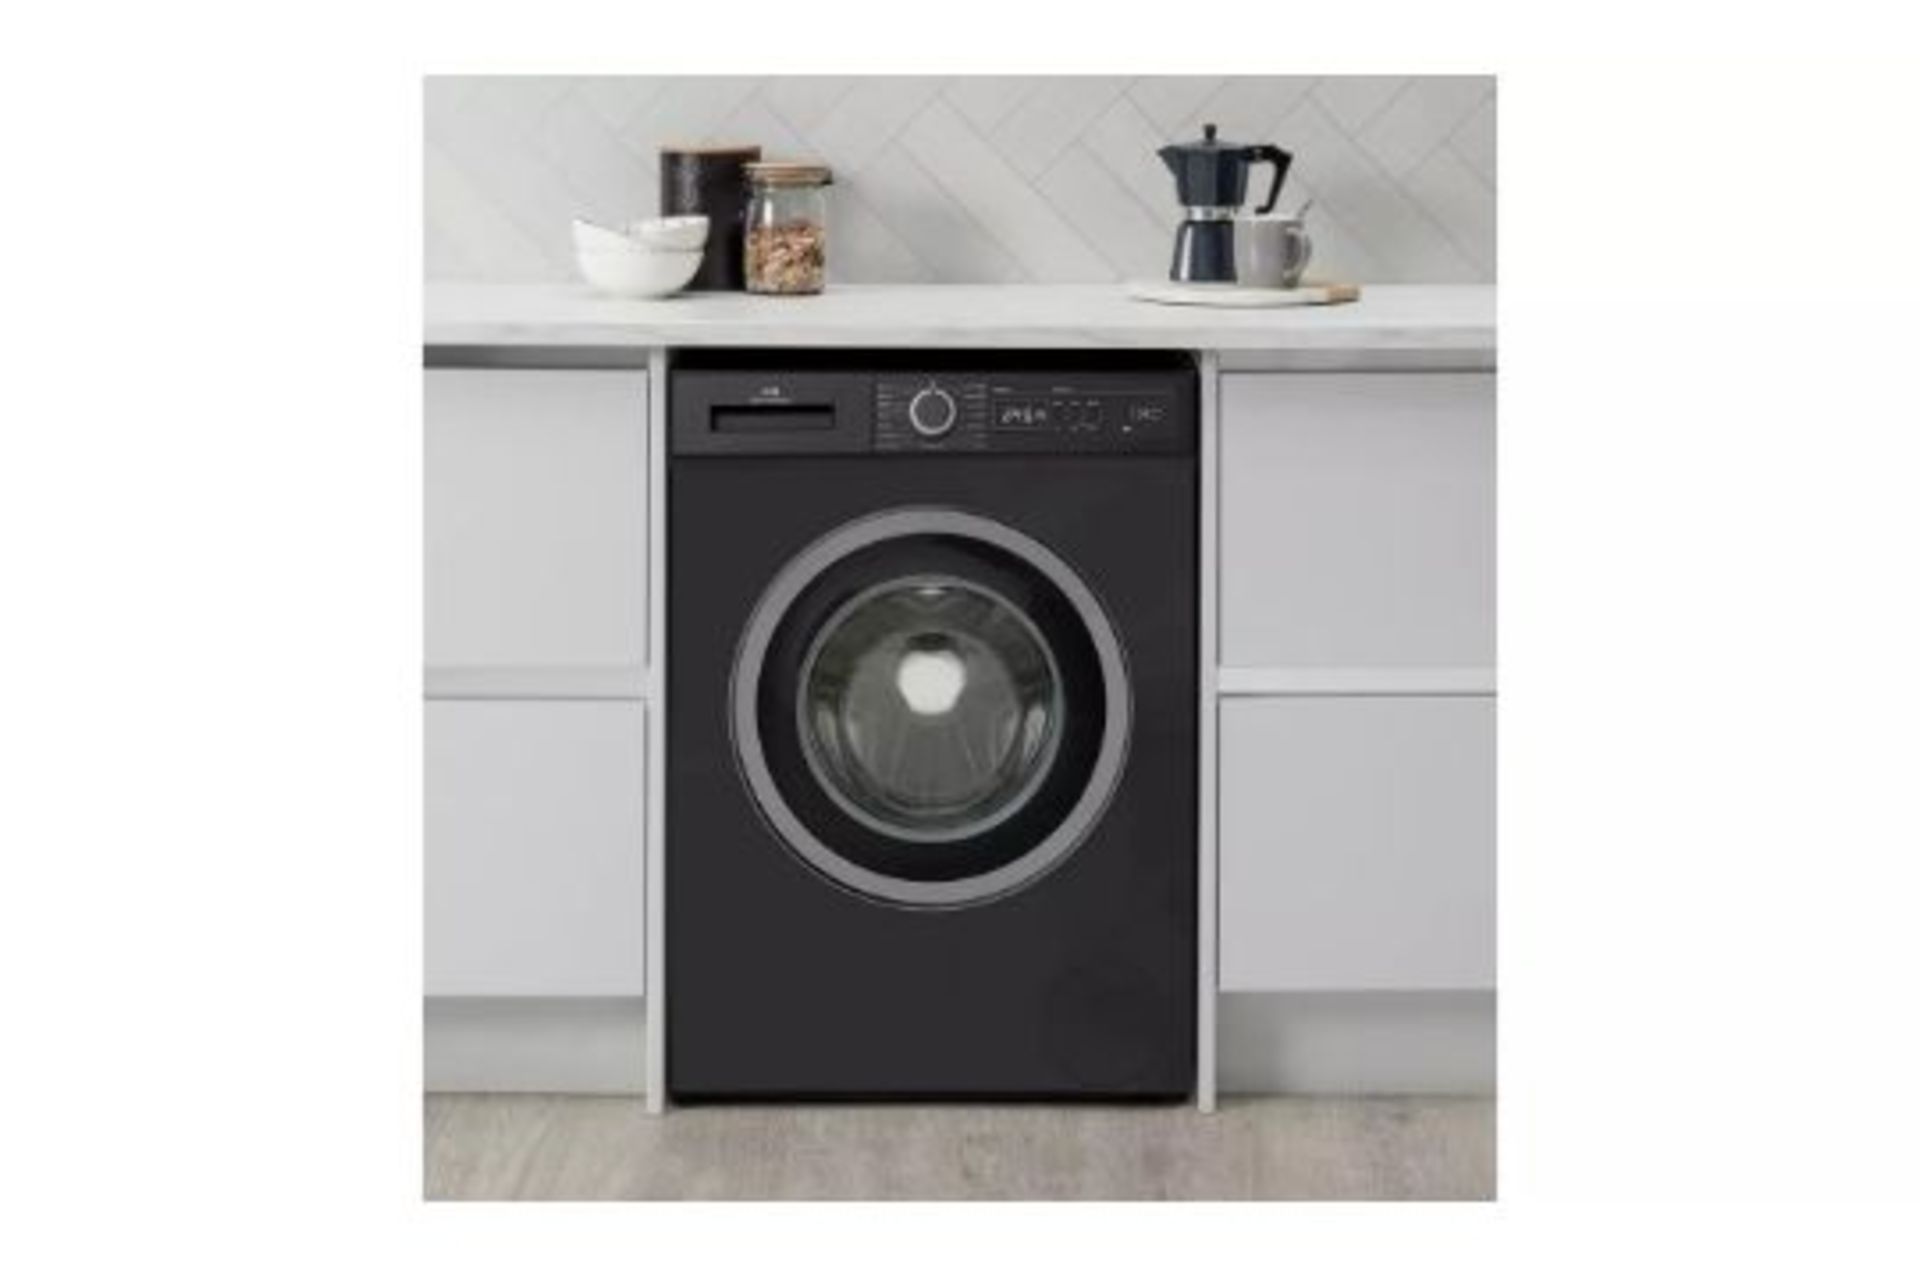 New World NWDHT714W 7KG 1400 Spin Washing Machine - Black - ARGOS RRP £239.99